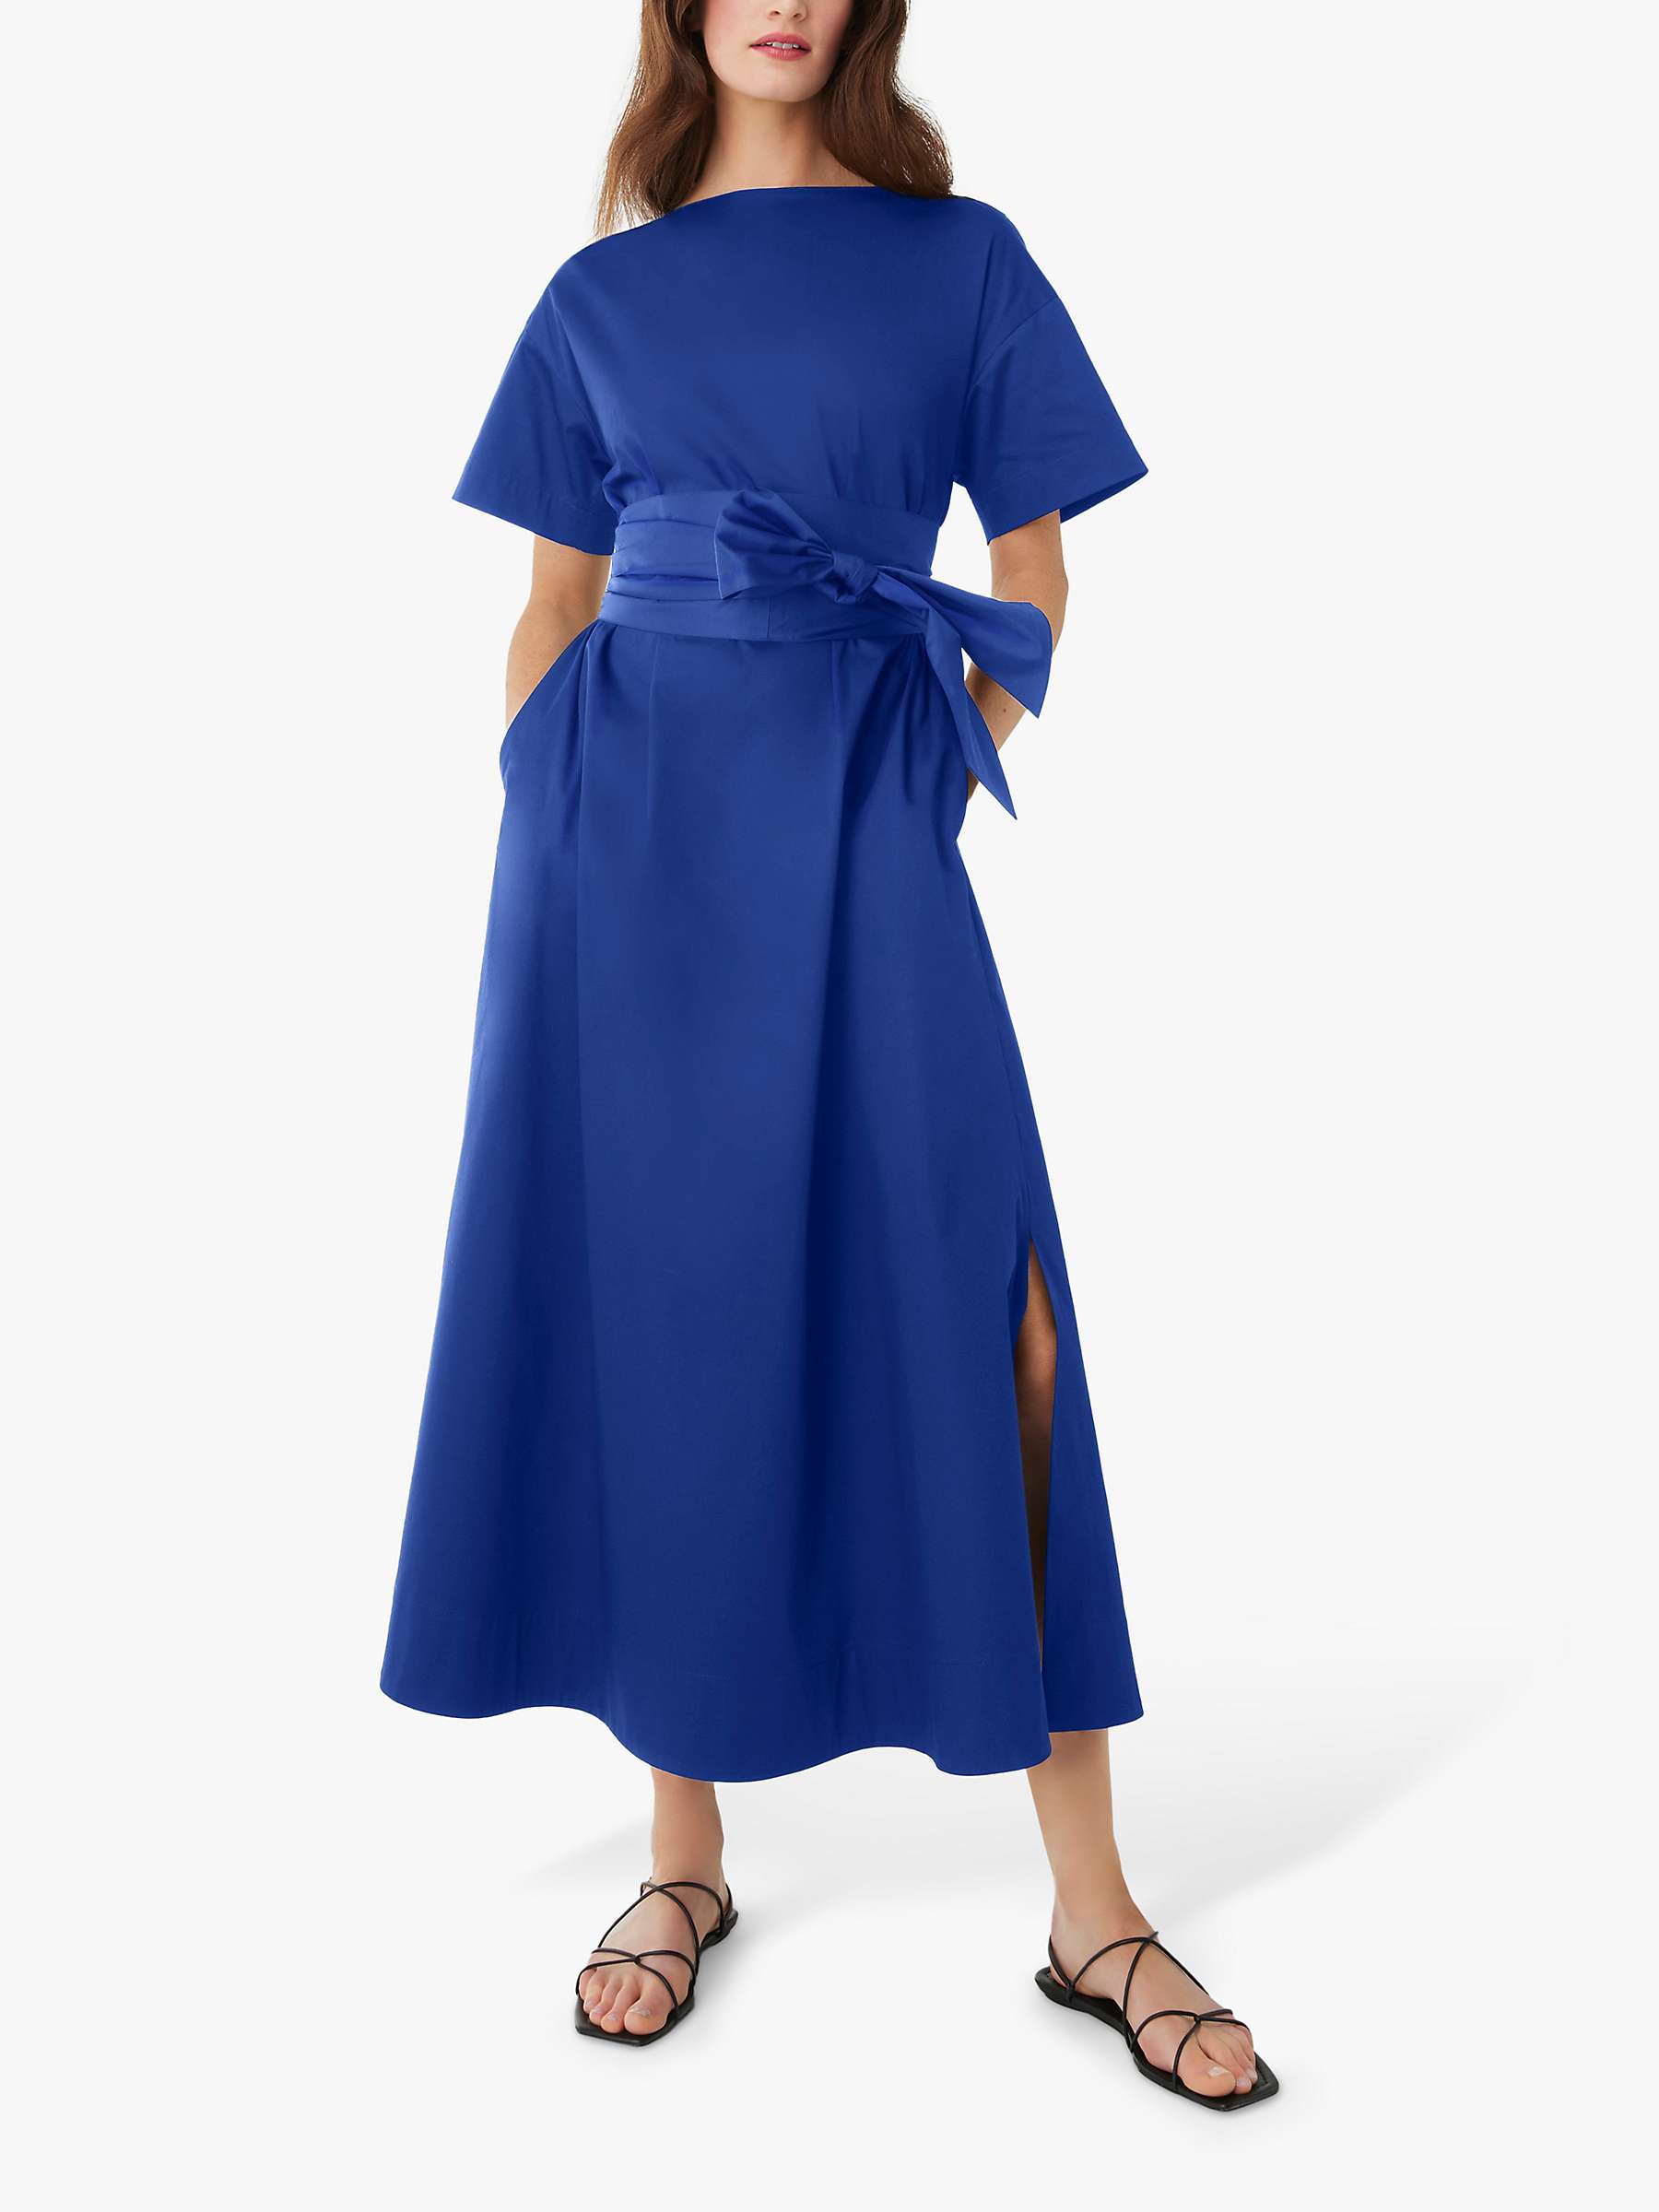 Buy Jasper Conran London Bonne A-Line Swing Dress, Blue Online at johnlewis.com